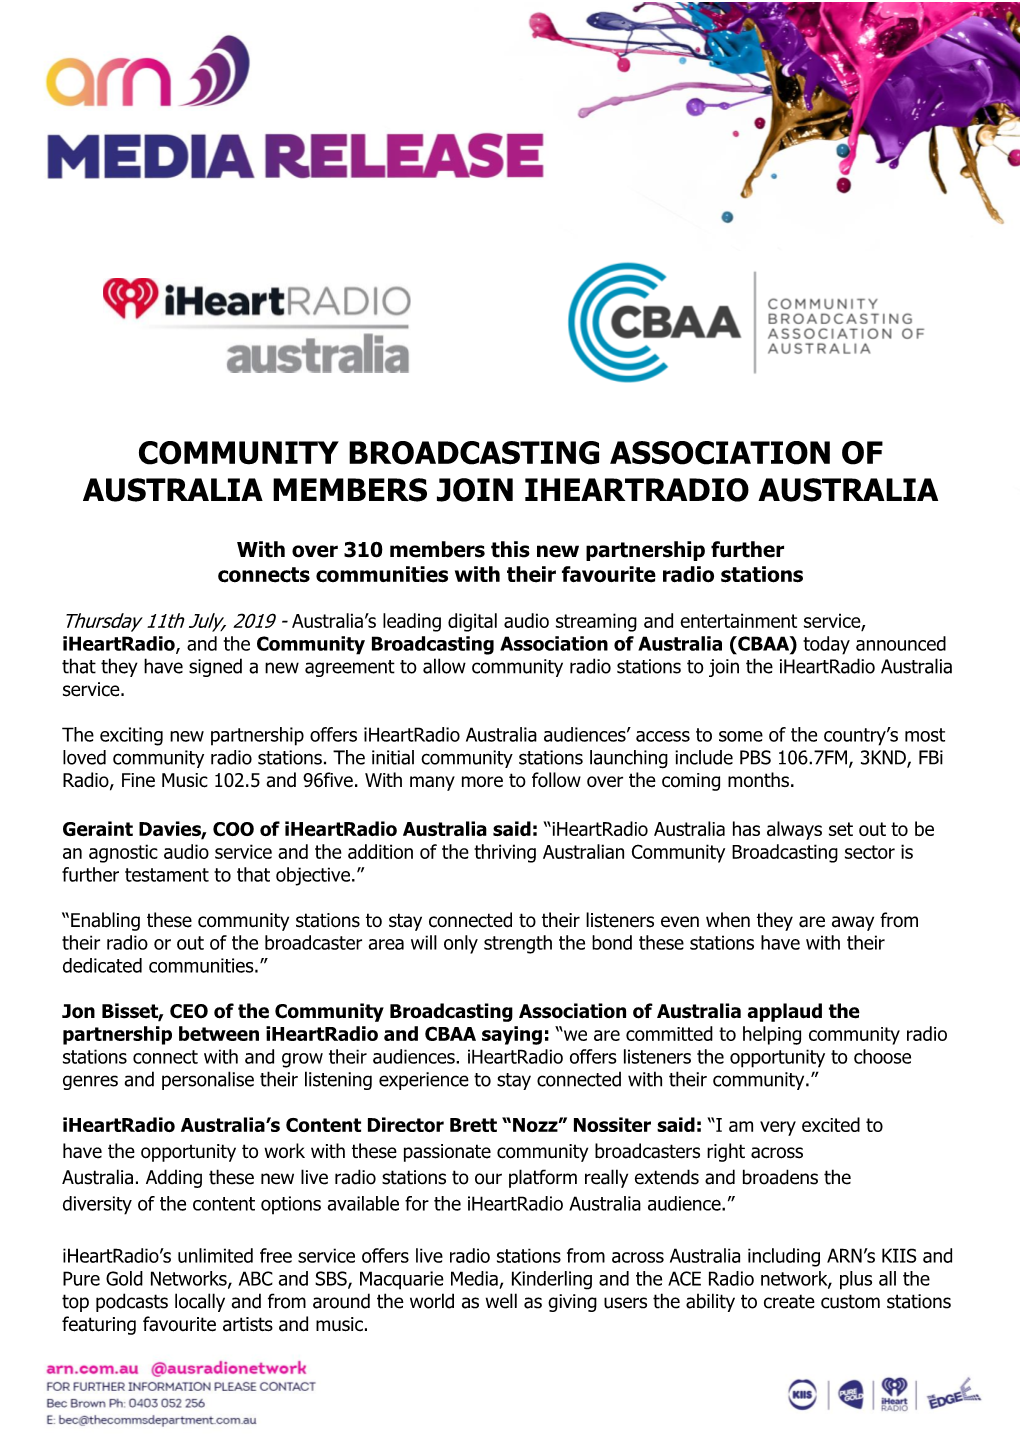 Community Broadcasting Association of Australia Members Join Iheartradio Australia